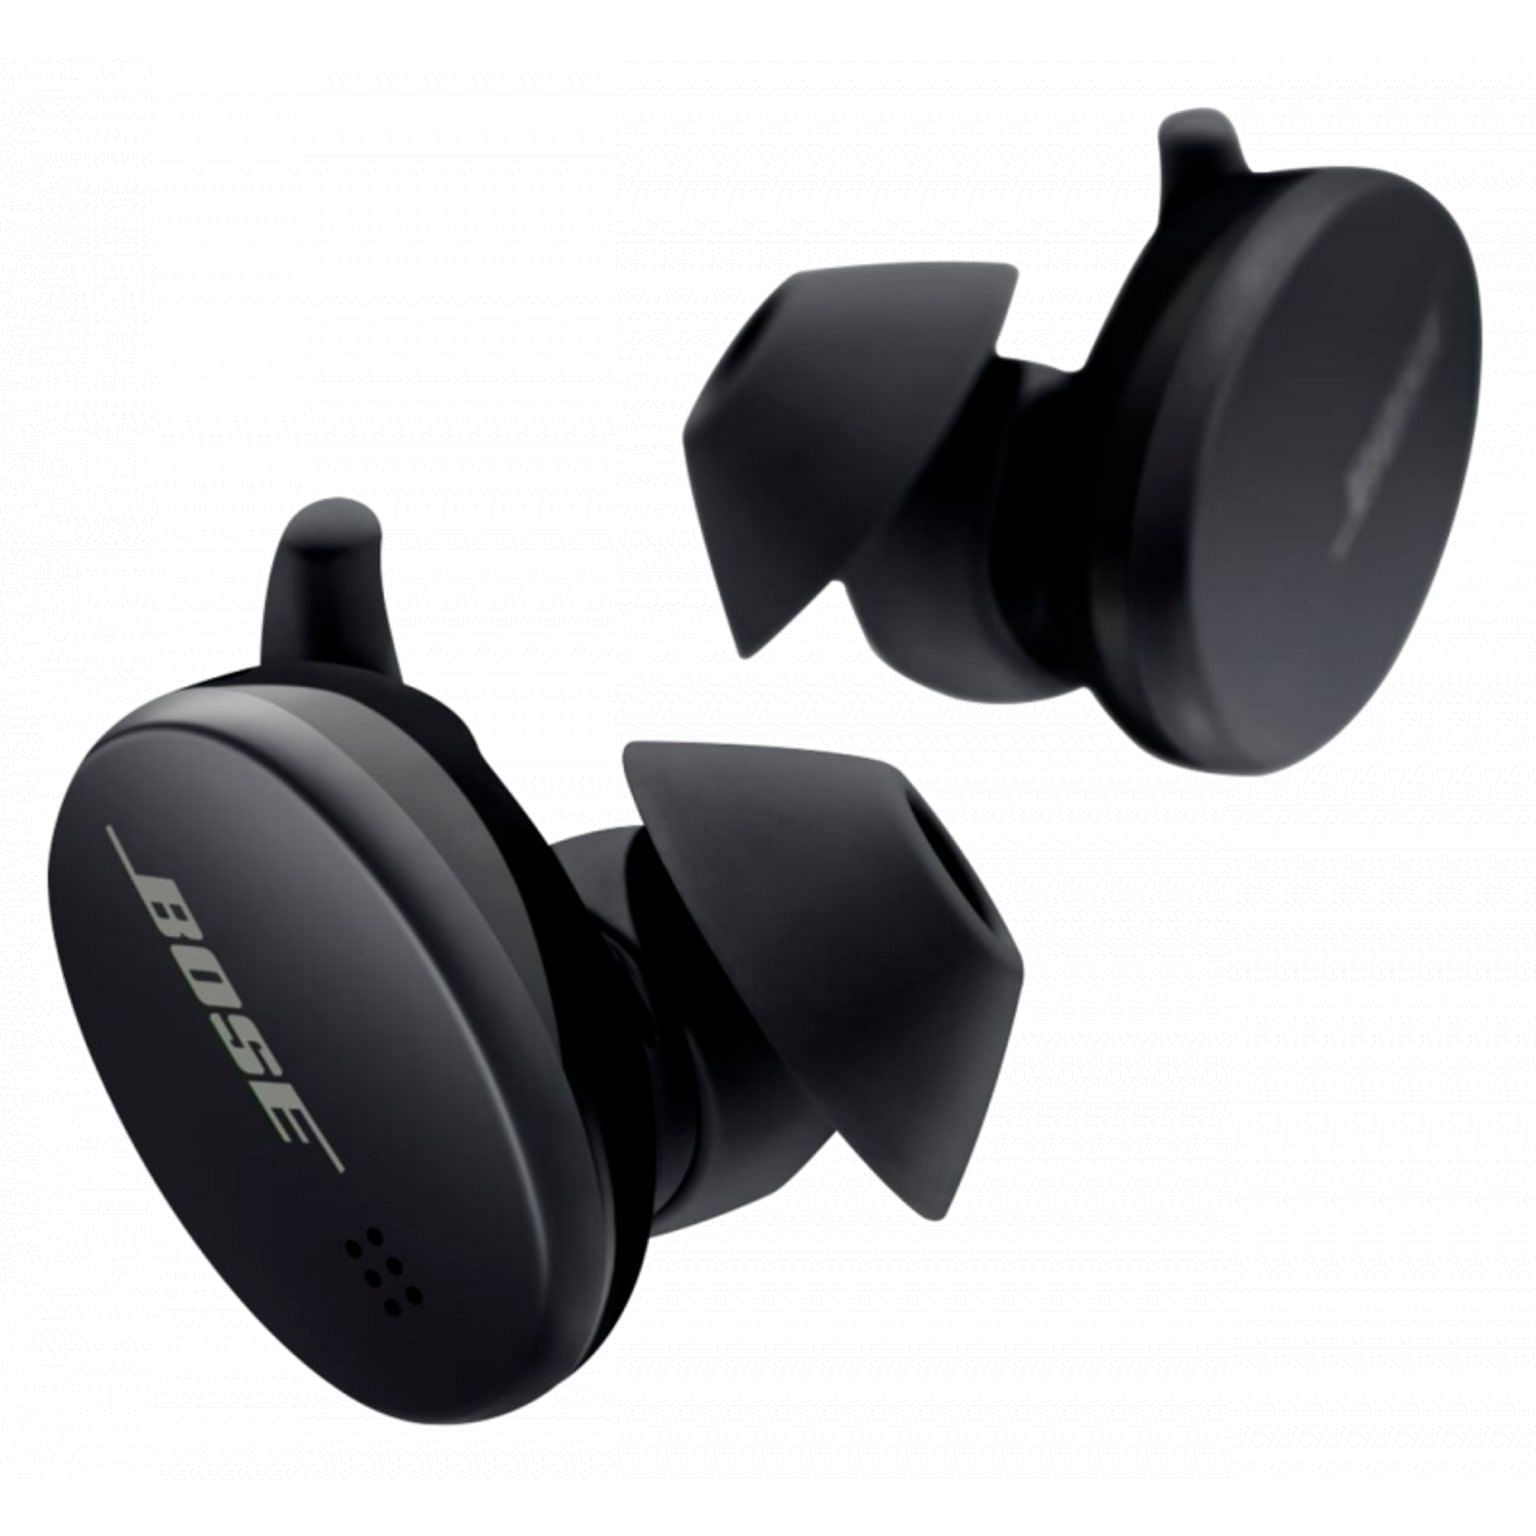 Bose QuietComfort Earbuds (Image via Bose)